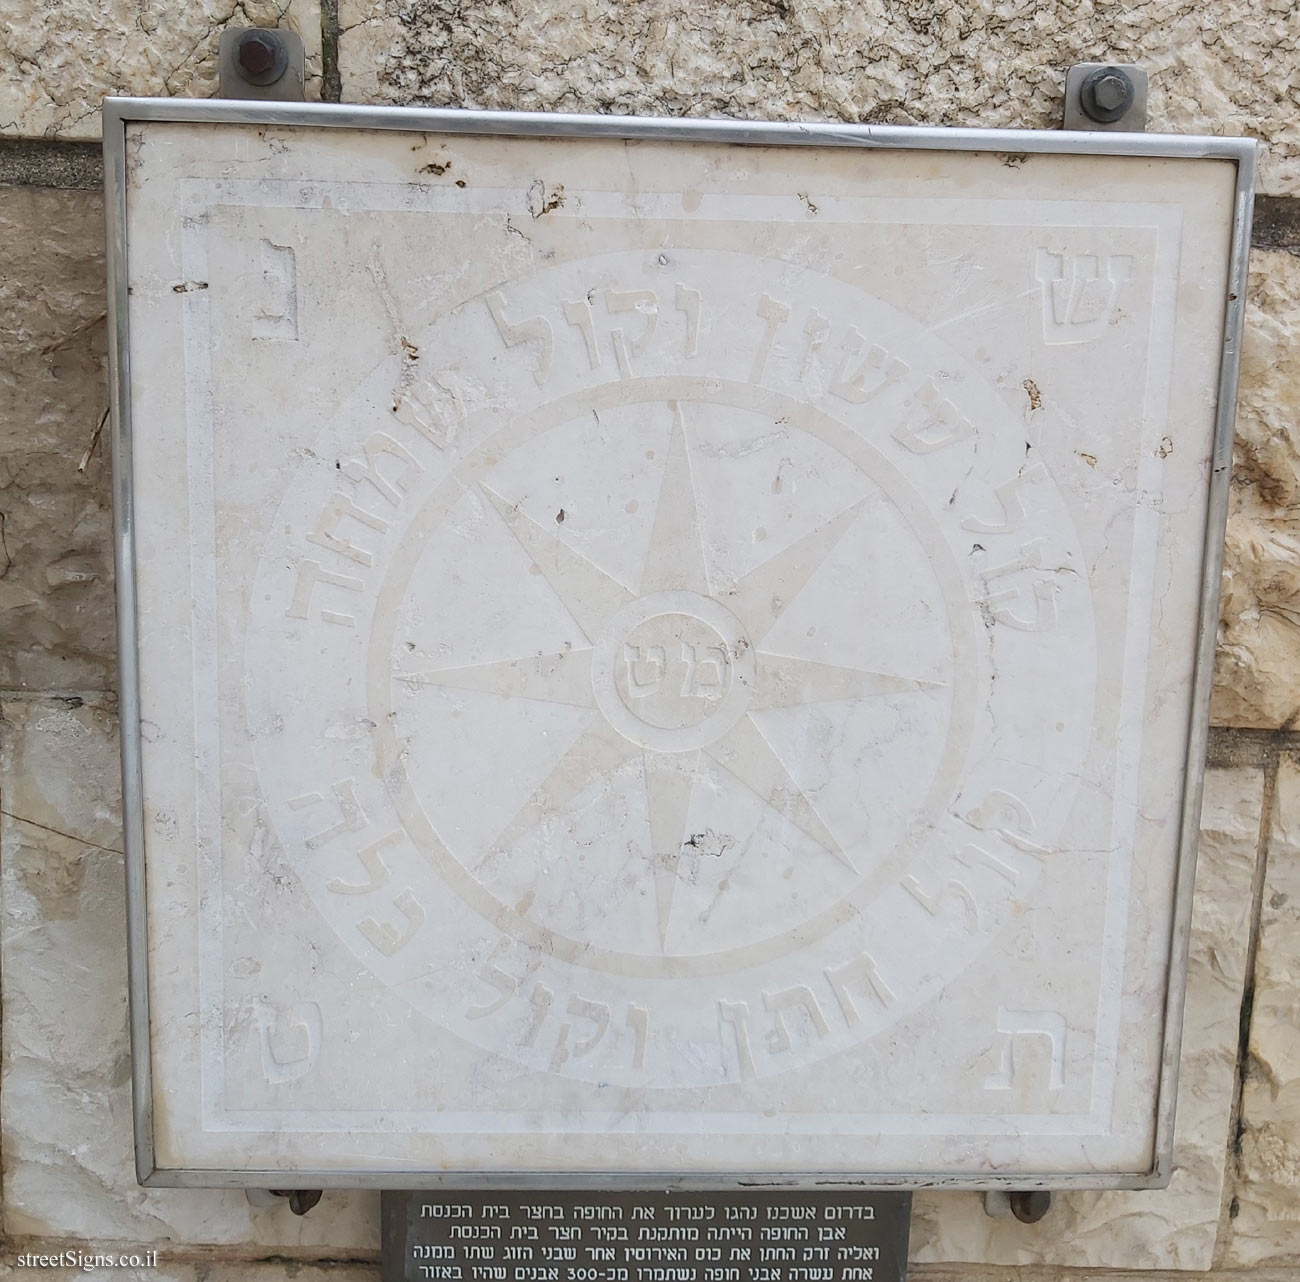 Jerusalem - The Great Synagogue - Chuppah Stone - King George St 56, Jerusalem, Israel